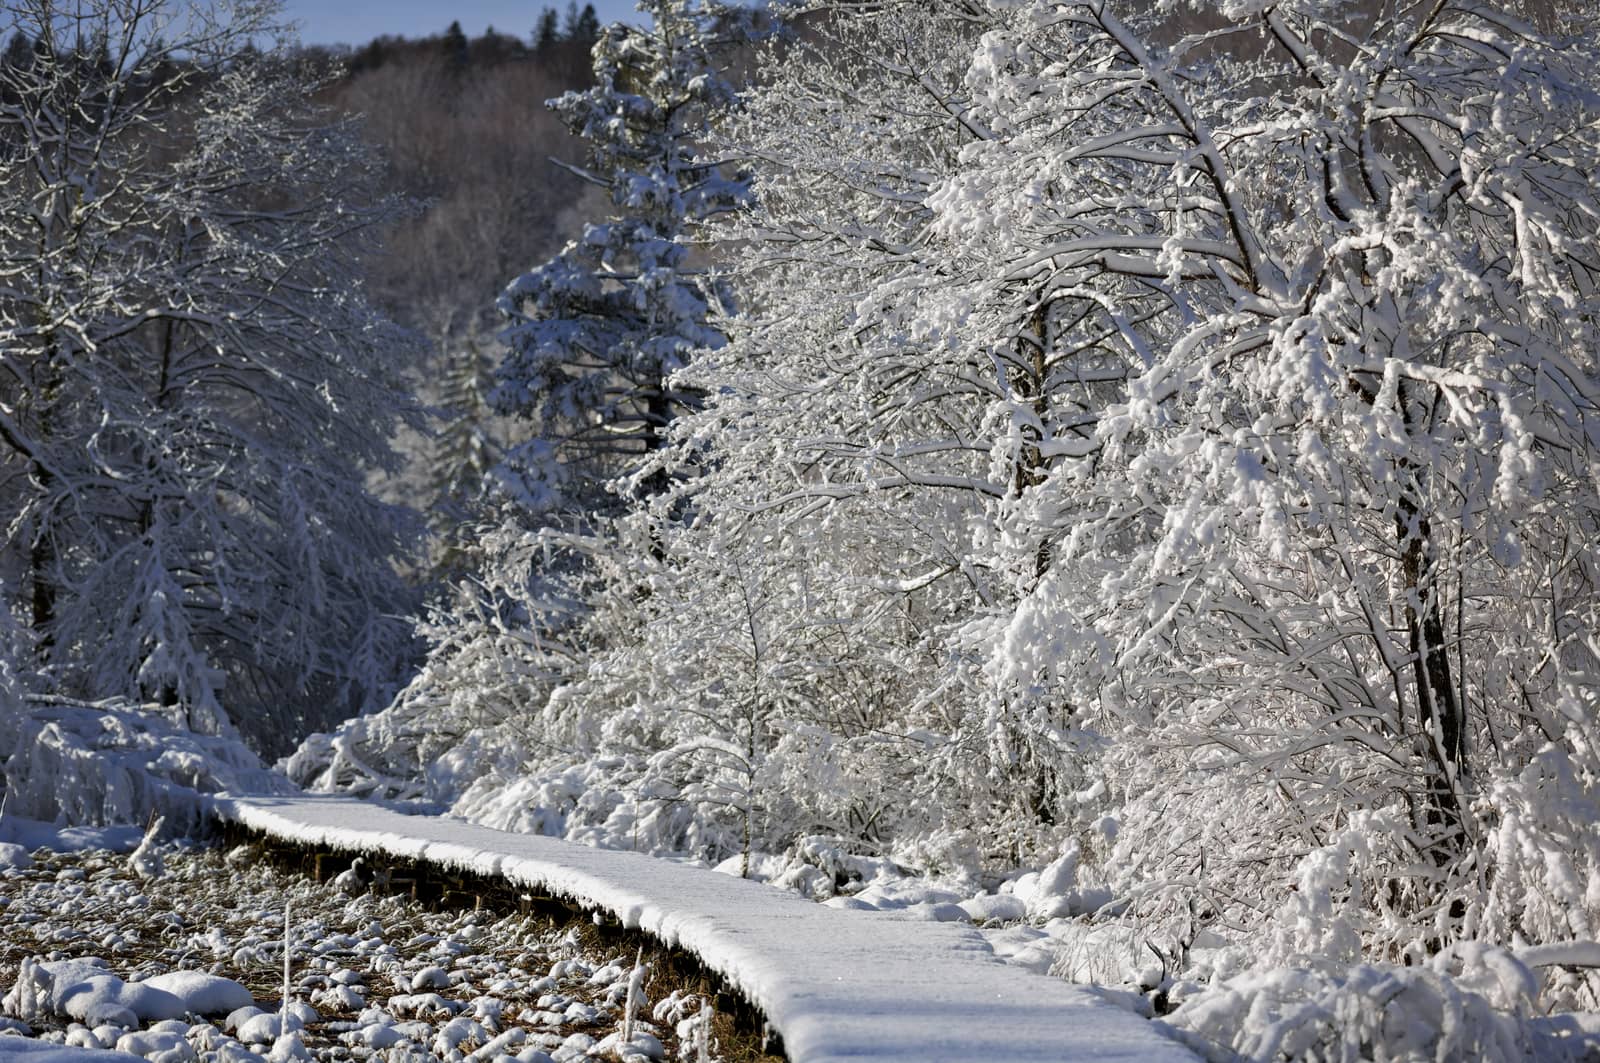 Forgotten Snowy Wooden Catwalk by jetstream4wd